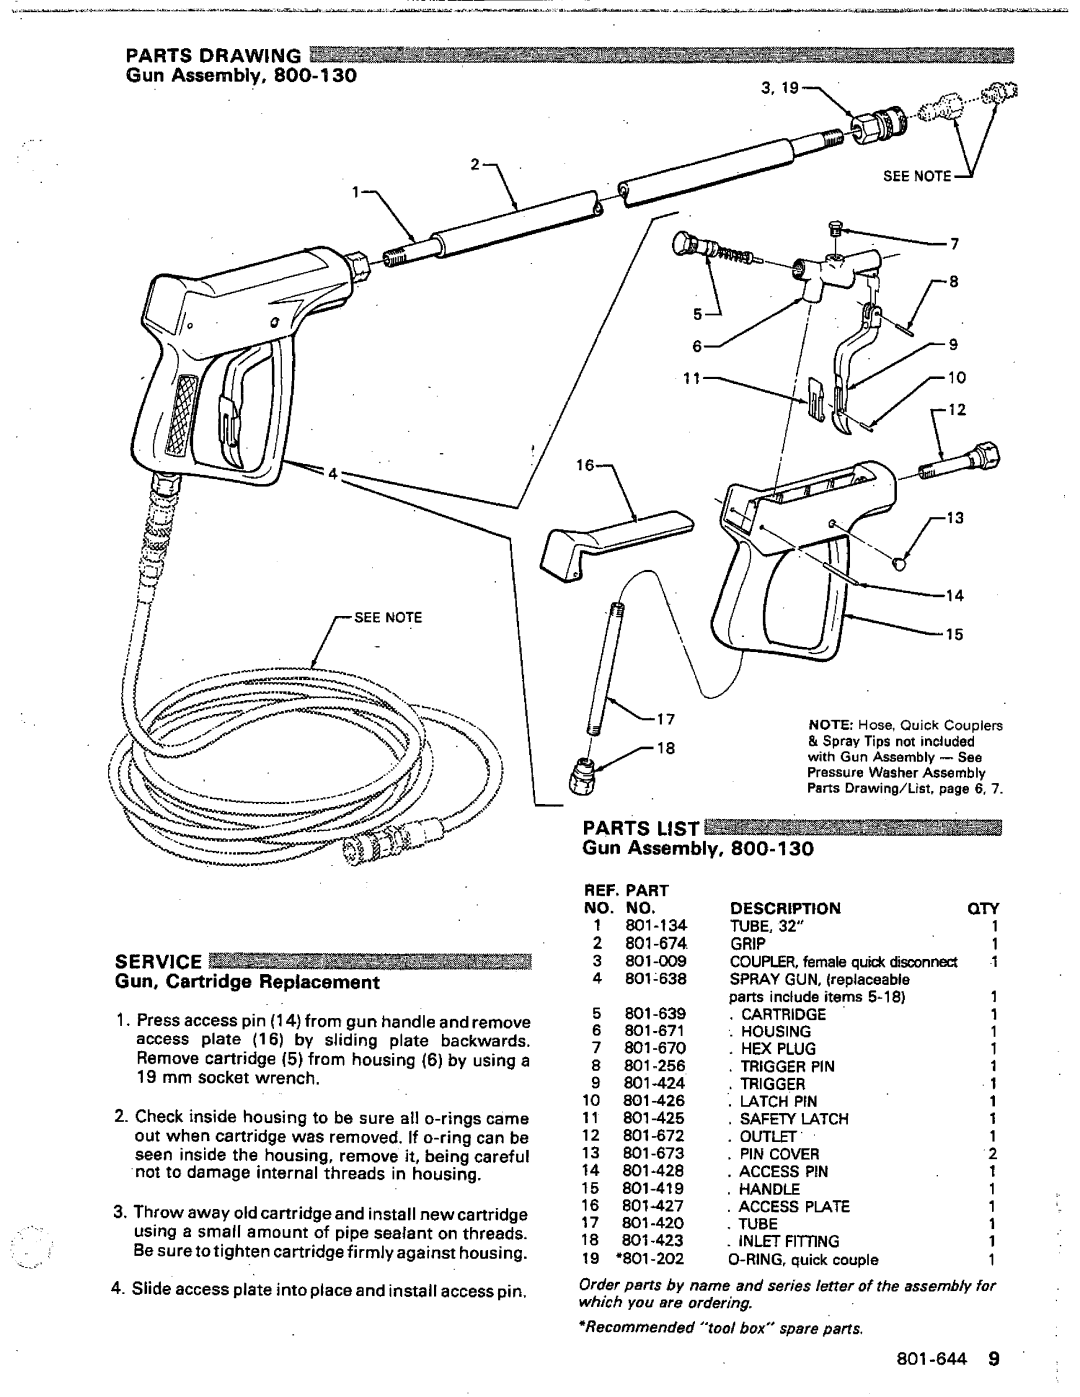 Graco Inc 800-066, 3245 manual SERVICE Gun, Cartridge Replacement, PARTS LIST Gun Assembly, No. No, Description, 801-644 